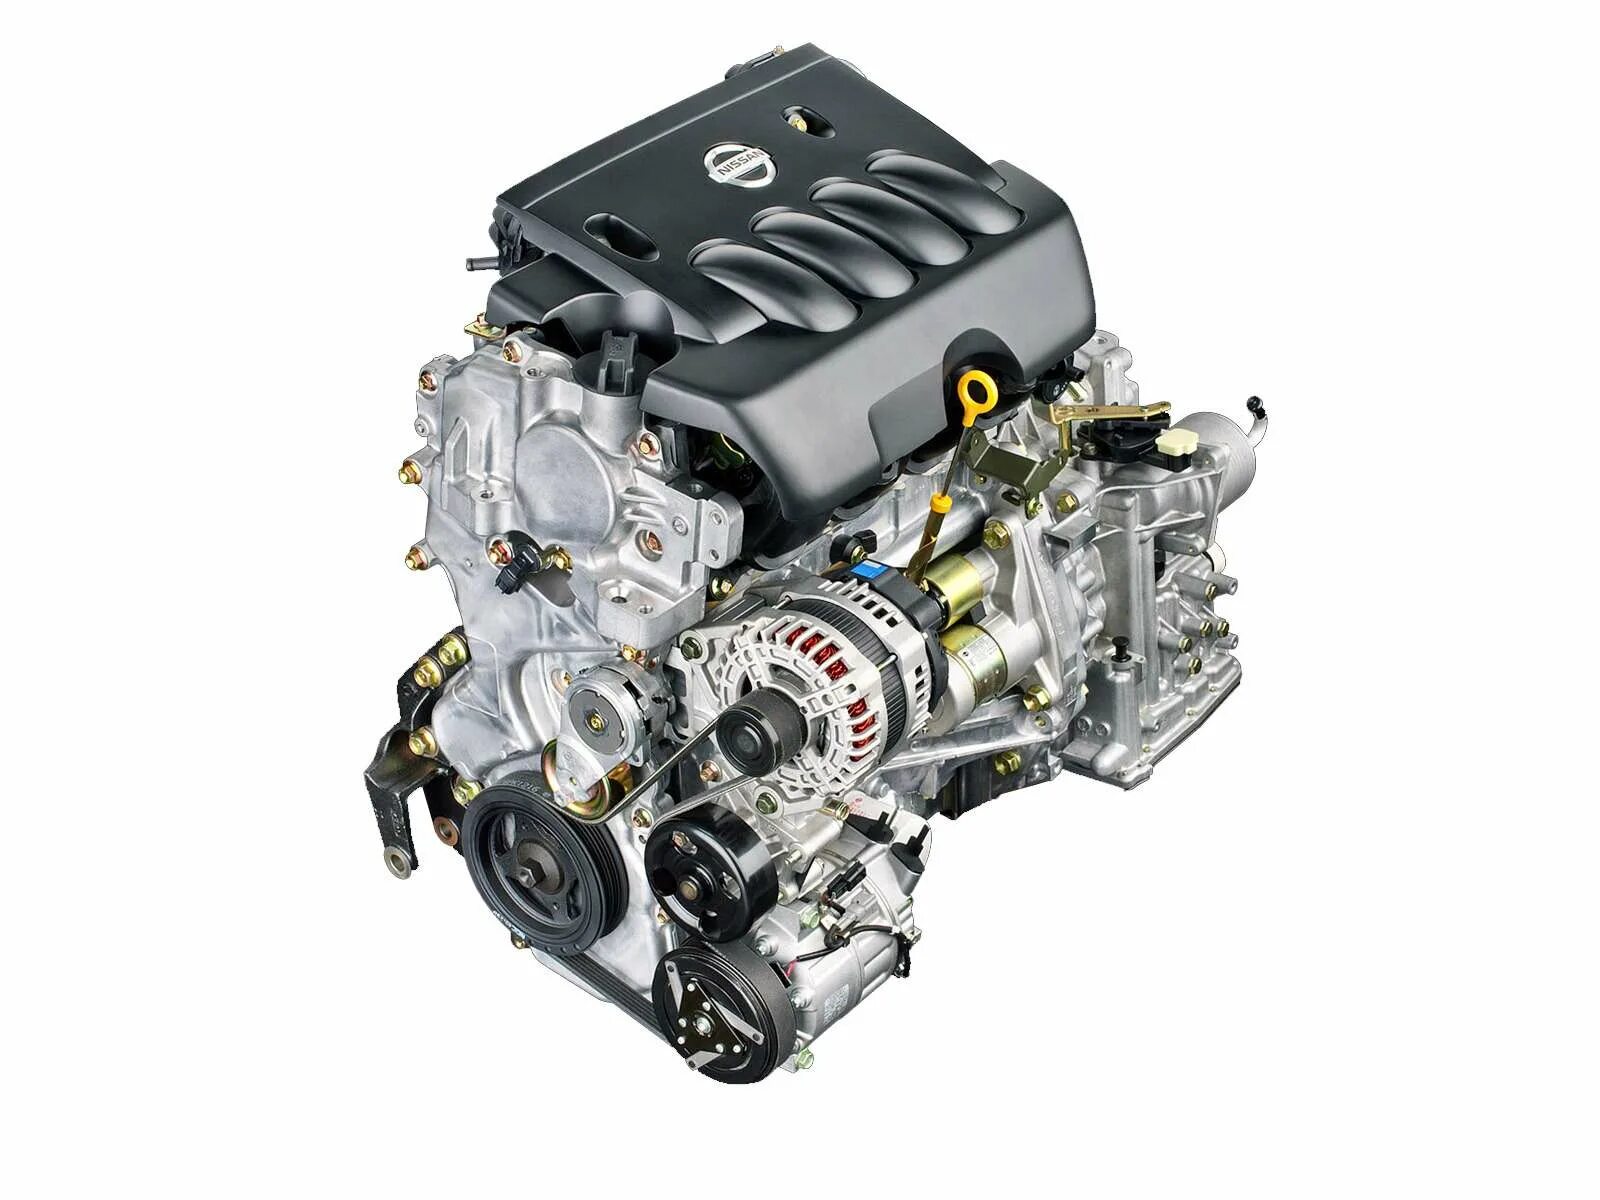 Двигатель Рено Дастер h4m. Двигатель f4r Рено Дастер 2.0. Двигатель Renault k4m. M4r/mr20.